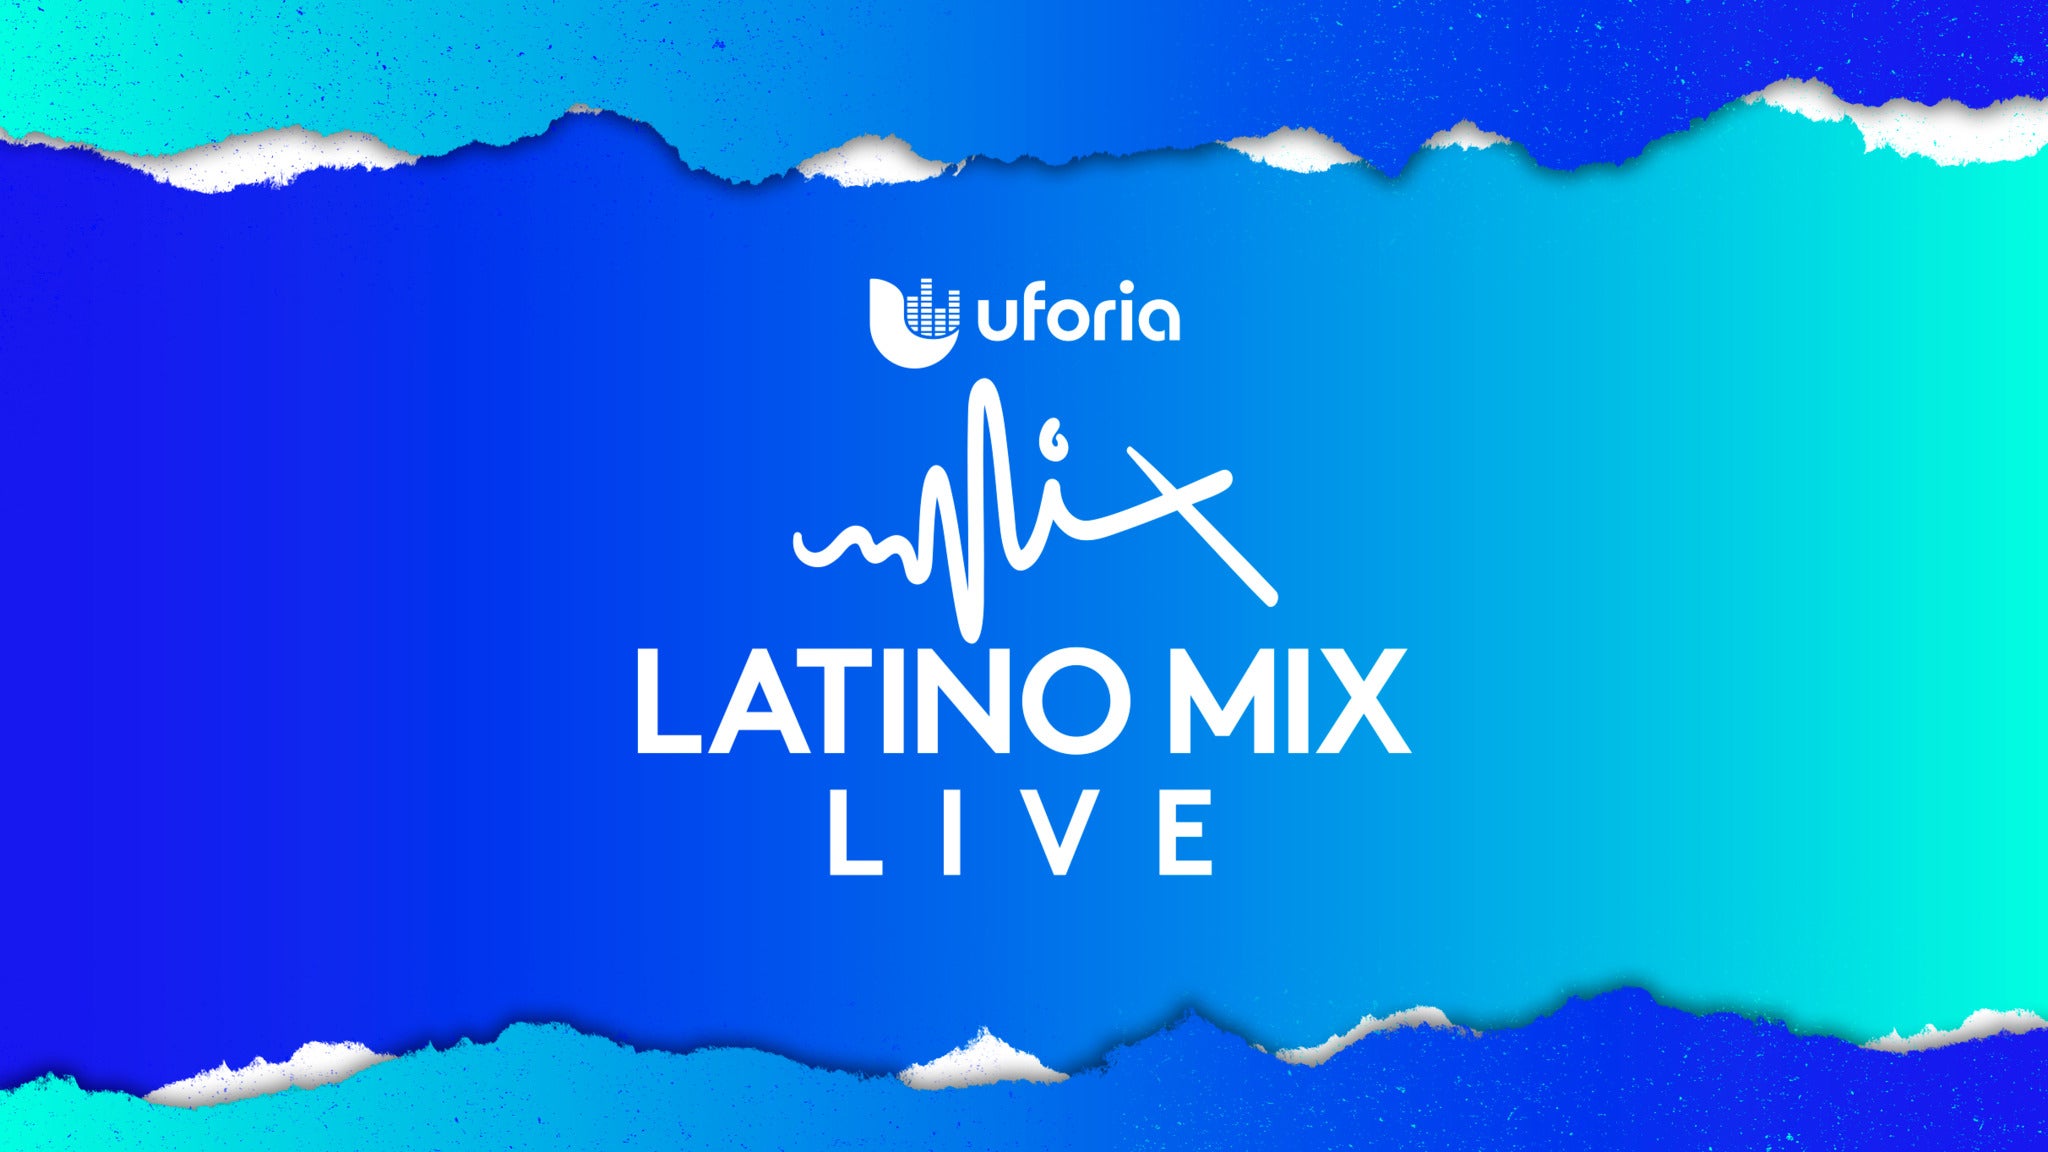 Uforia Latino Mix Live tickets, presale info, merch and